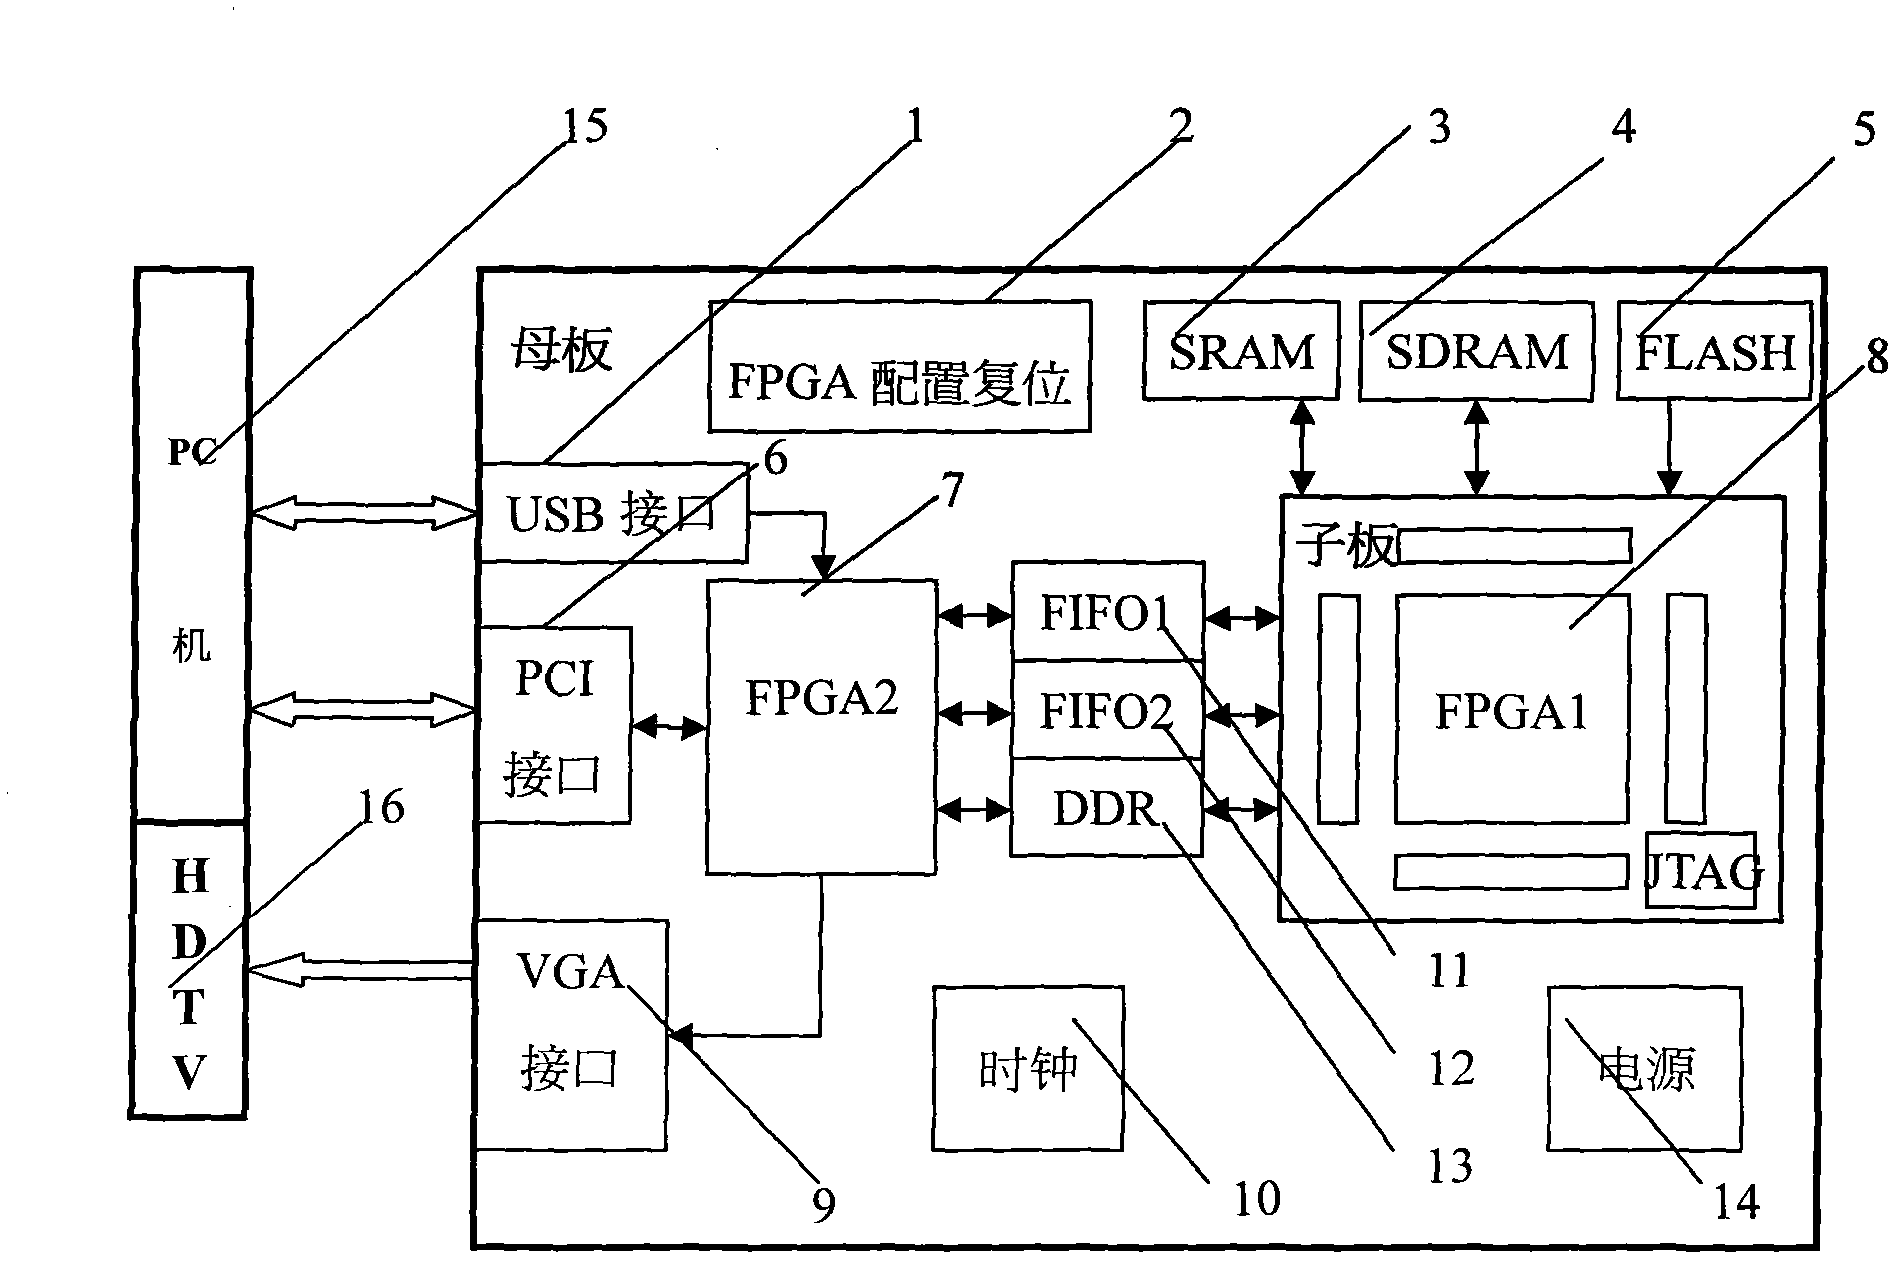 FPGA (Field Programmable Gate Array)-based AVS (Audio Video Standard) decoding chip verification platform device and method